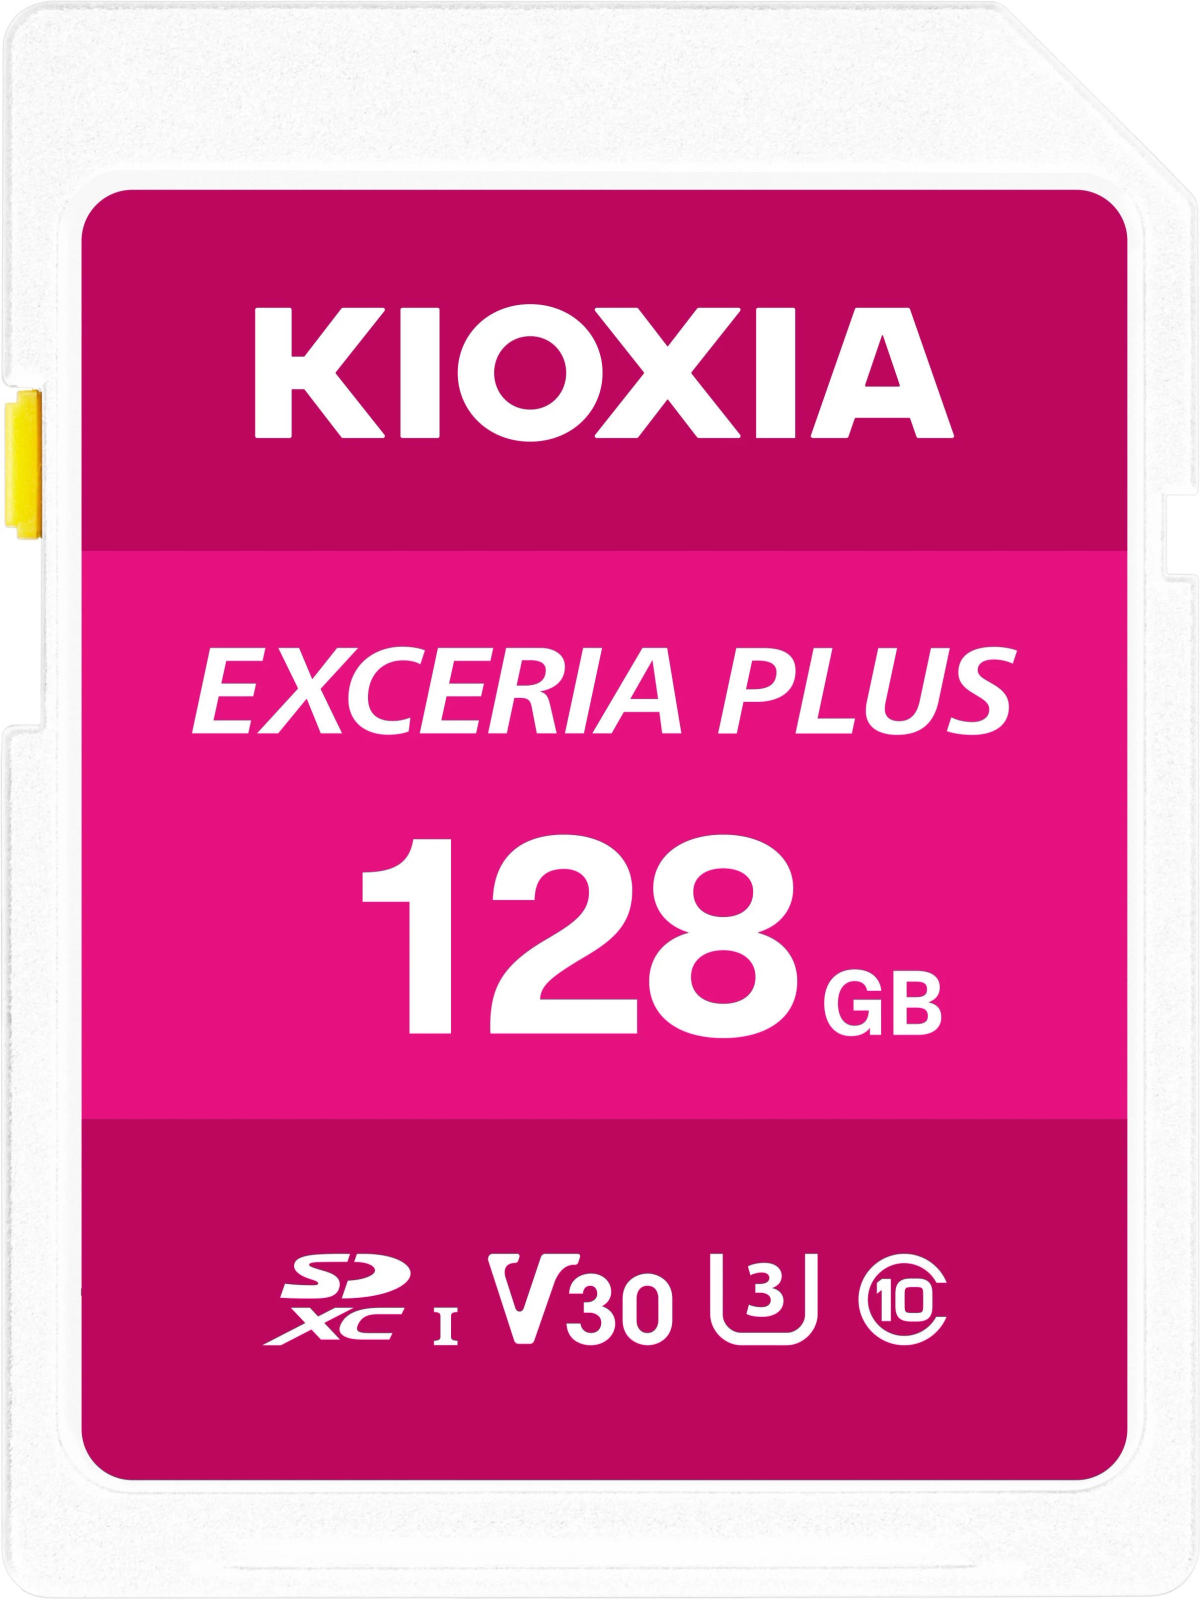 KIOXIA MB/s SDXC, 128 GB, LNPL1M128GG4, SD Speicherkarte, 100